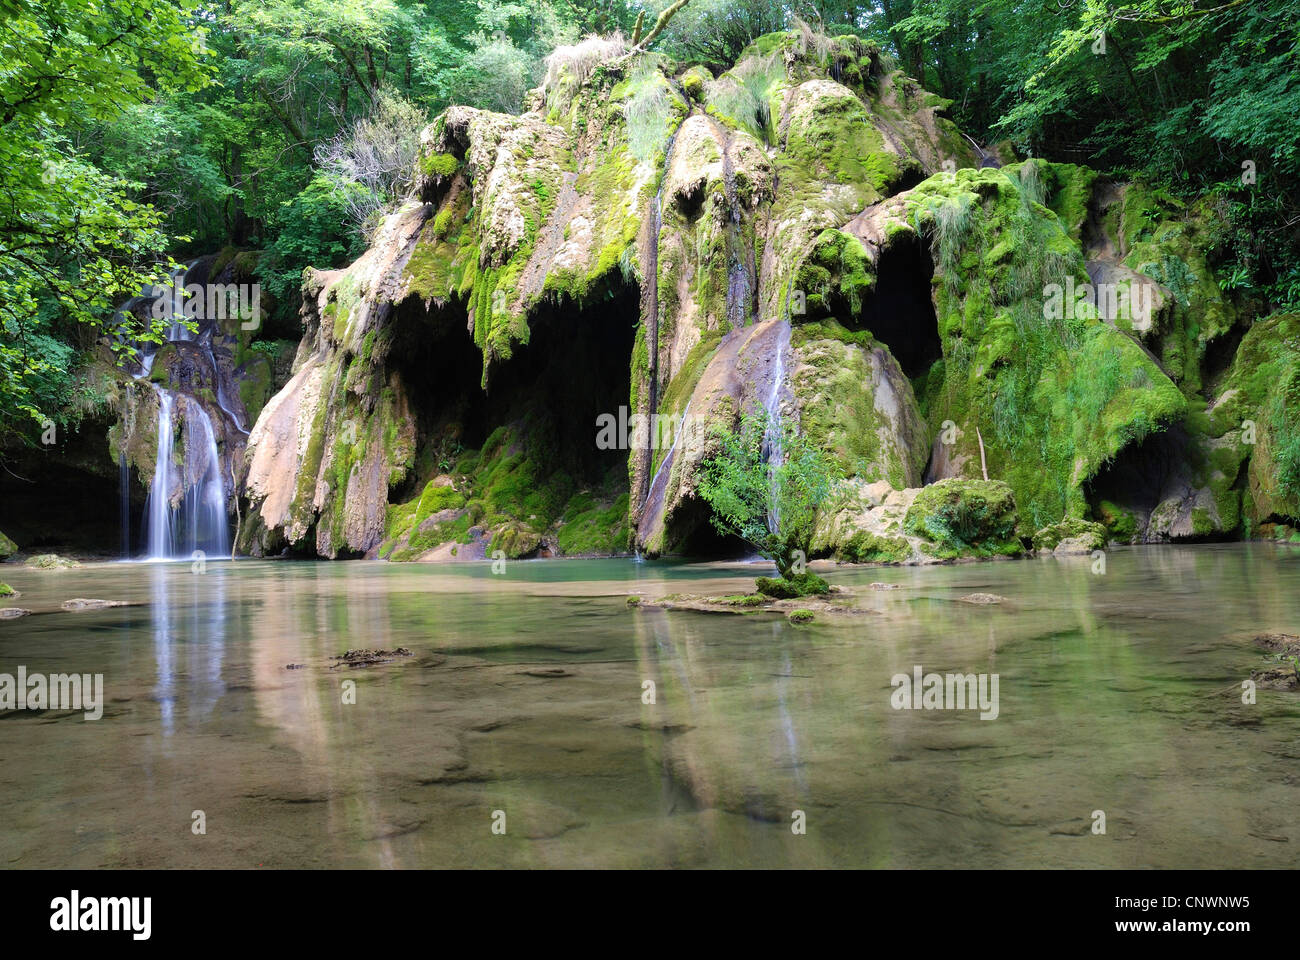 Kaskade des Planches, Wasserfall, Arbois, Jura, Franche-Comte, Frankreich Stockfoto